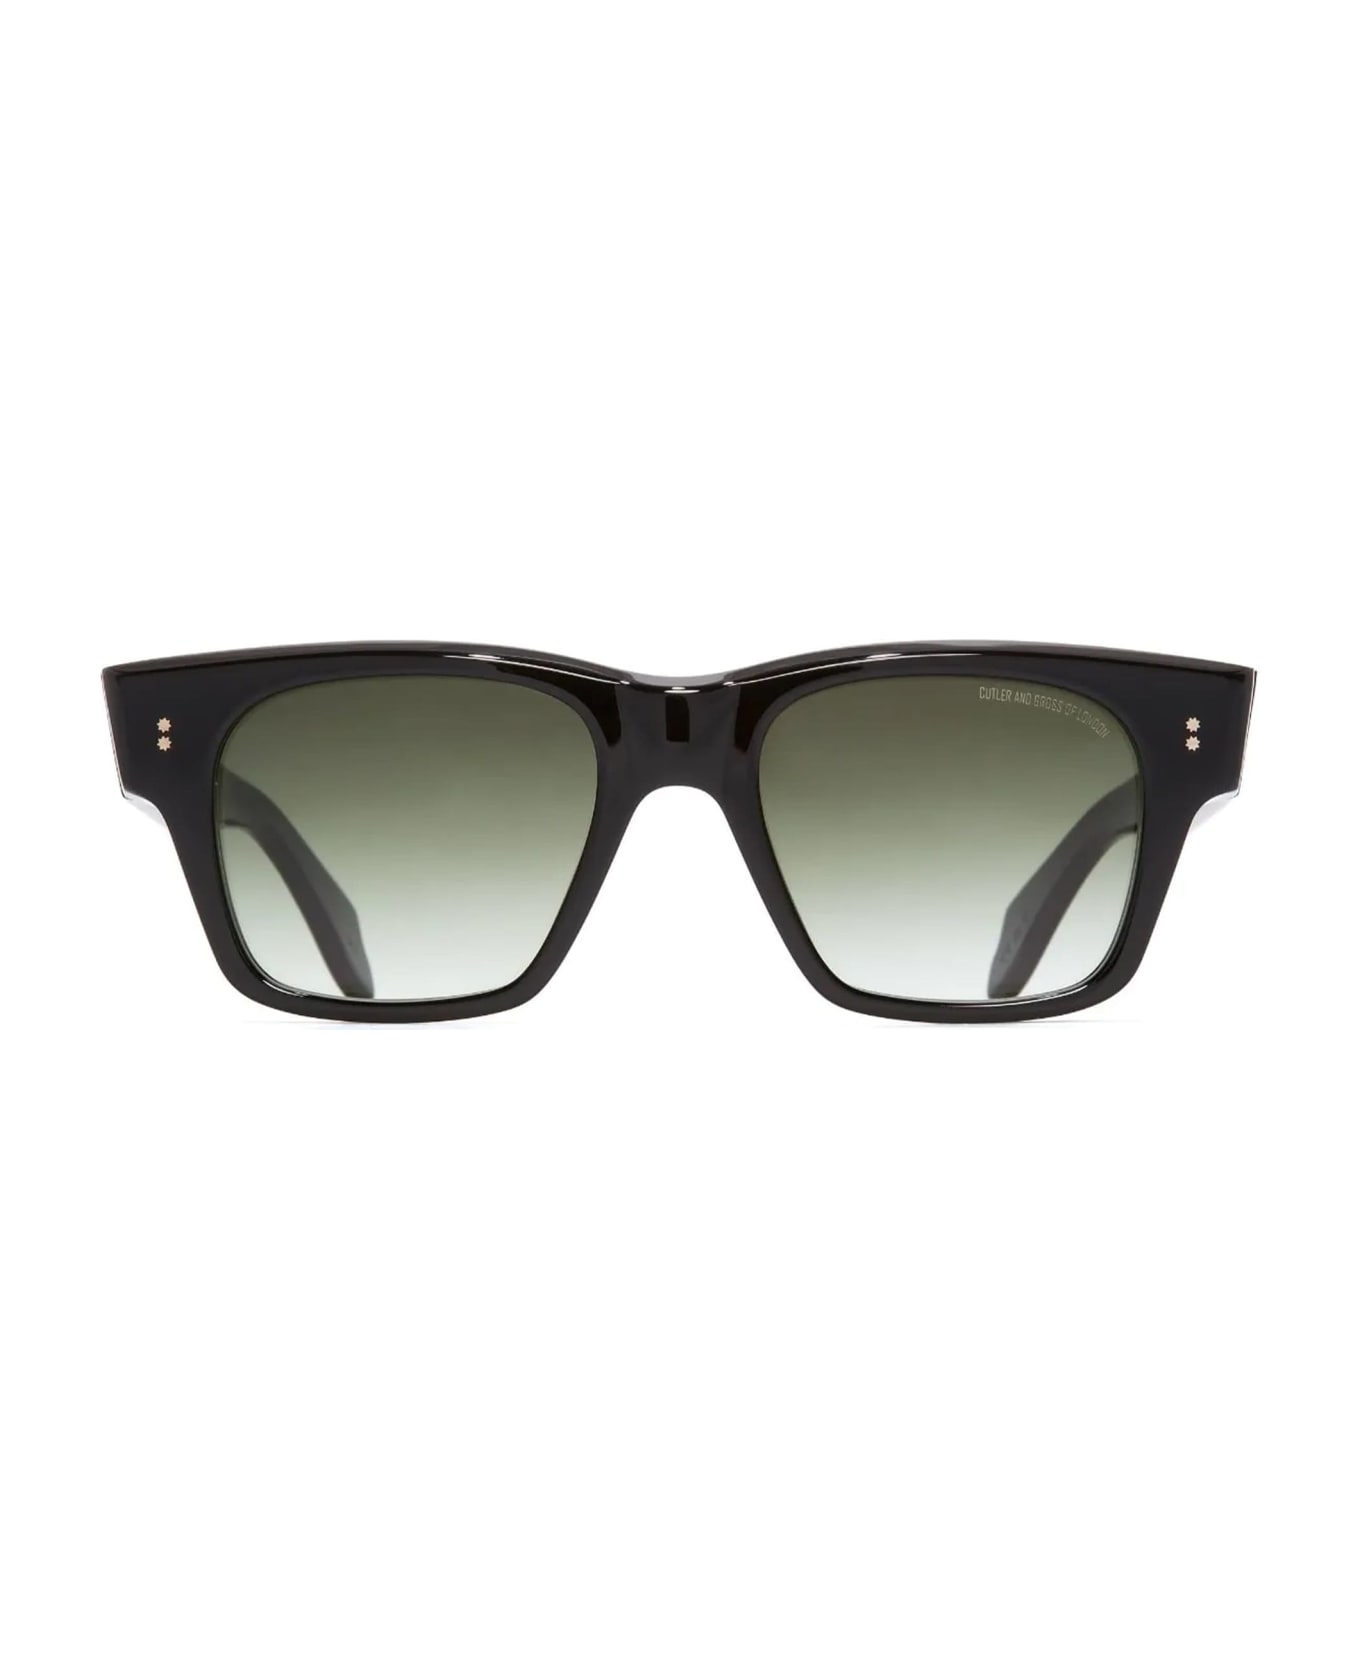 Cutler and Gross 9690 / Black Sunglasses - Black